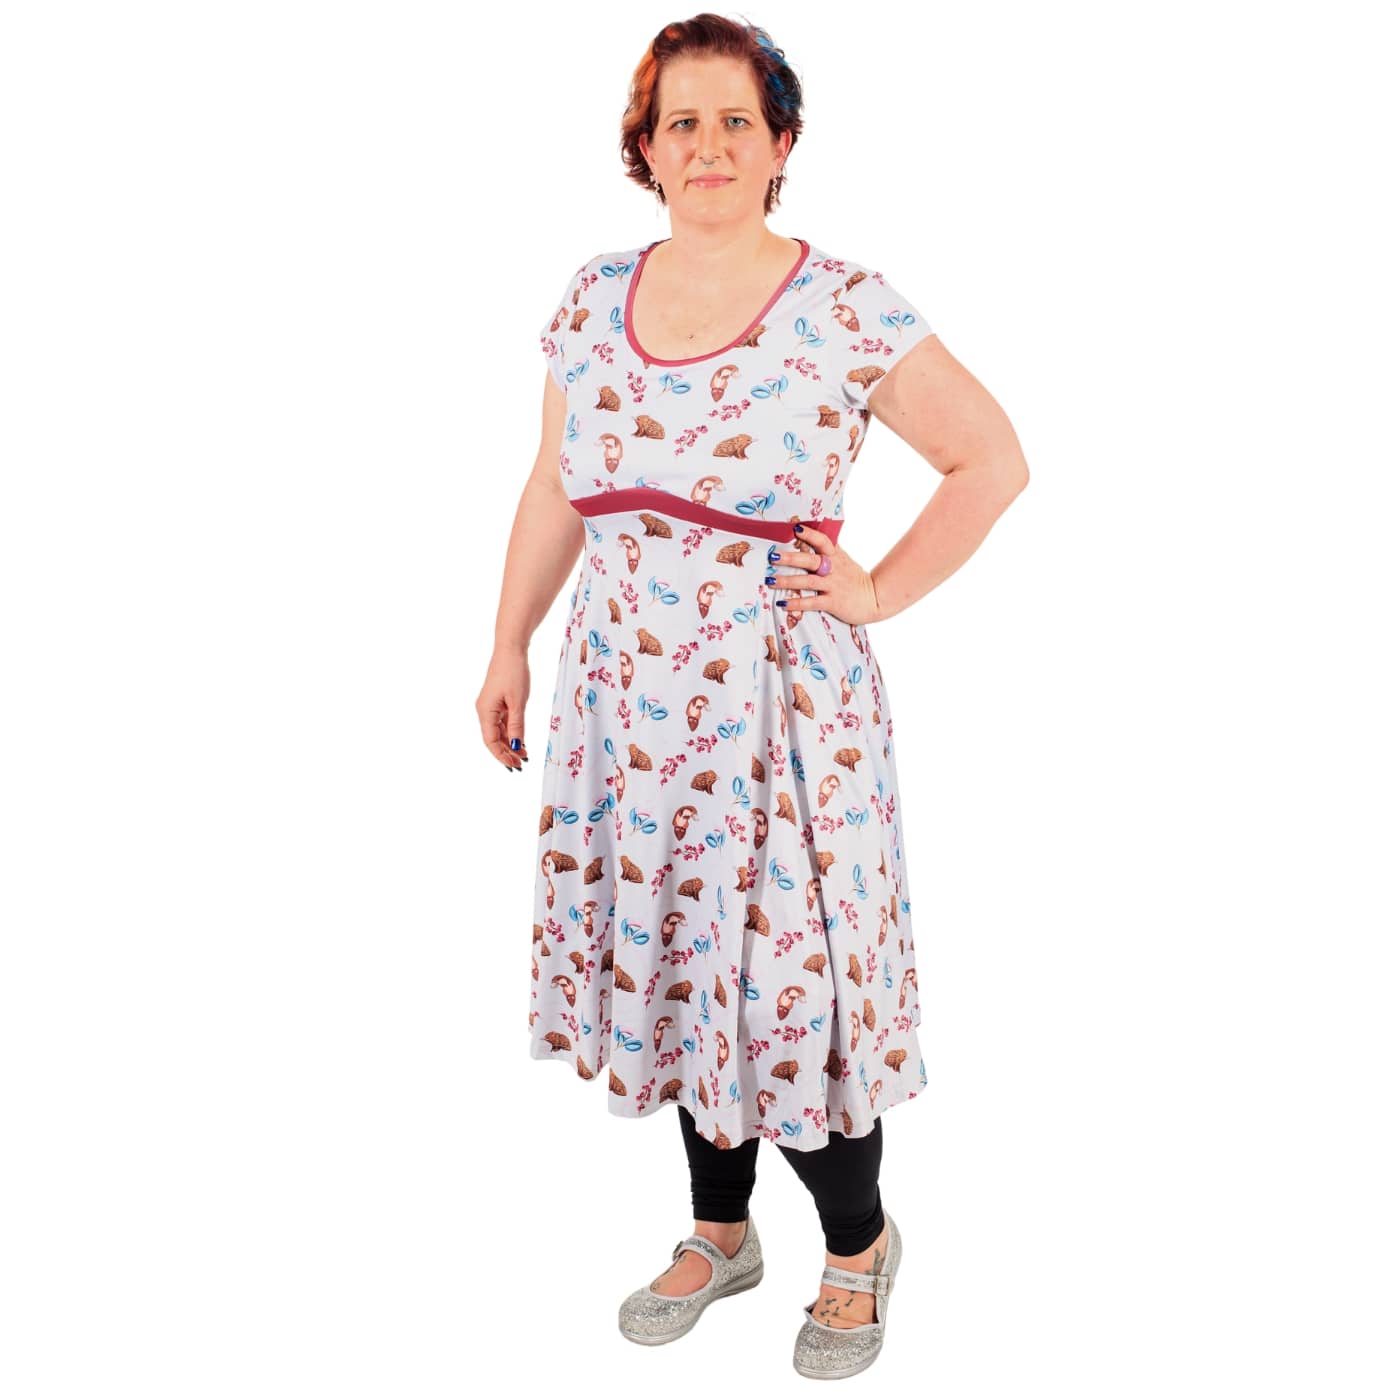 Puggle Tea Dress by RainbowsAndFairies.com (Platypus - Echidna - Australian - Dress With Pockets - Rockabilly - Vintage Inspired) - SKU: CL_TEADR_PUGGL_ORG - Pic 03